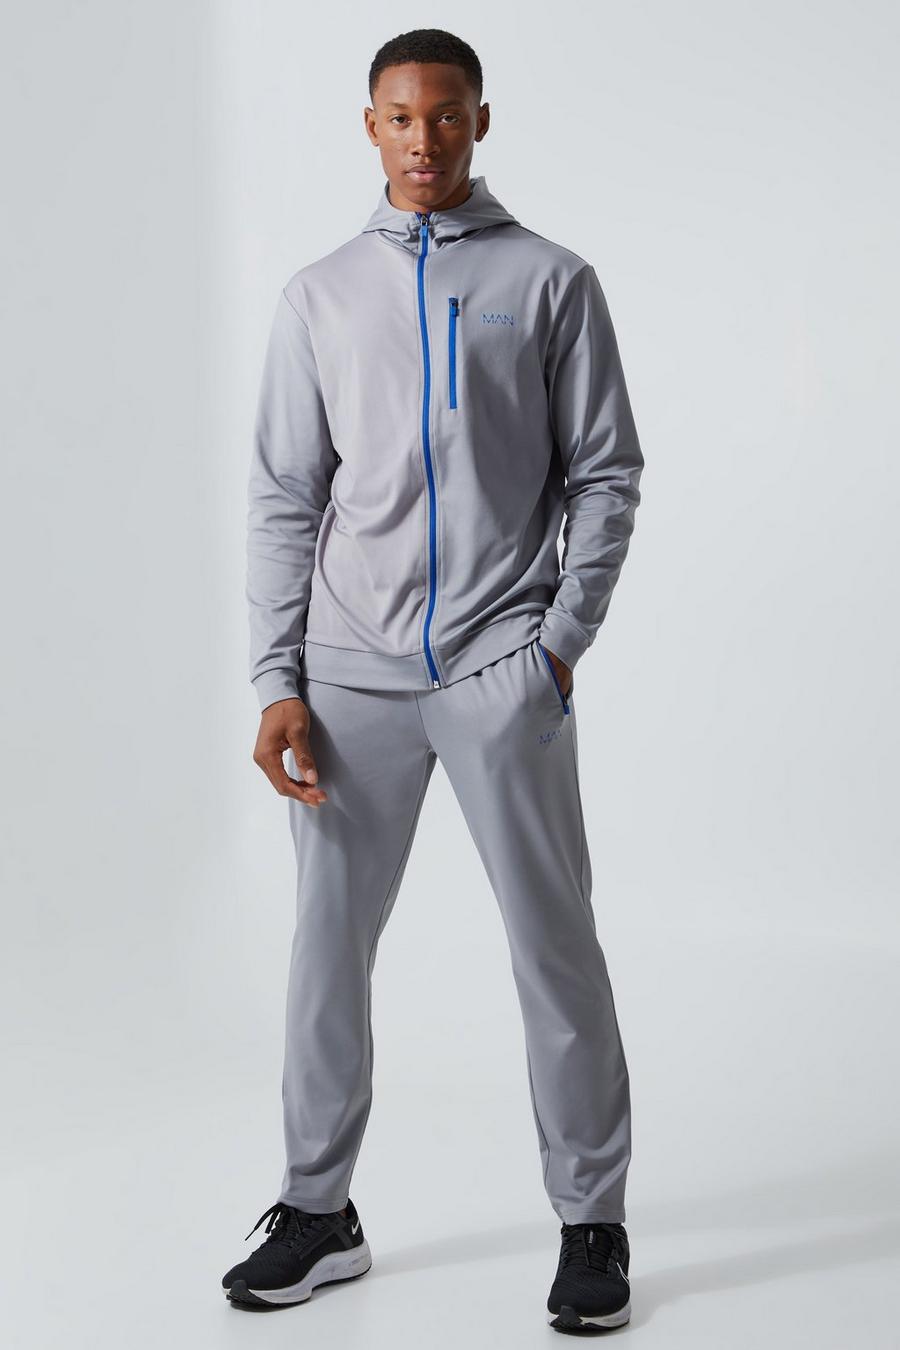 Man Active Colorblock Trainingsanzug mit Kapuze und Reißverschluss, Light grey